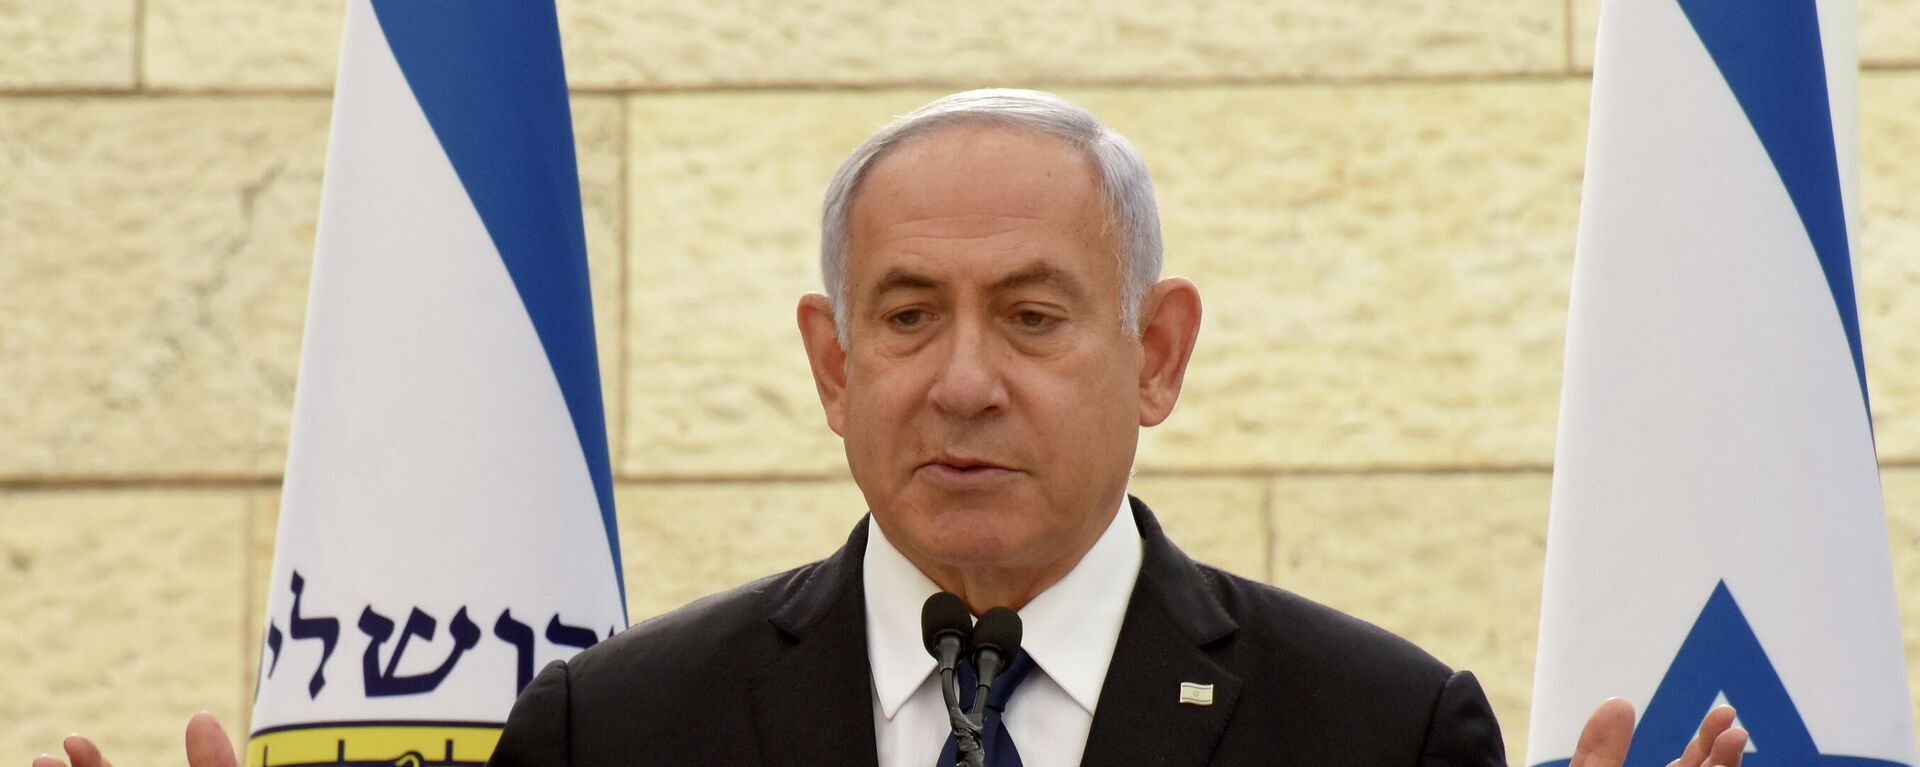 Benjamín Netanyahu, primer ministro israelí - Sputnik Mundo, 1920, 18.05.2021